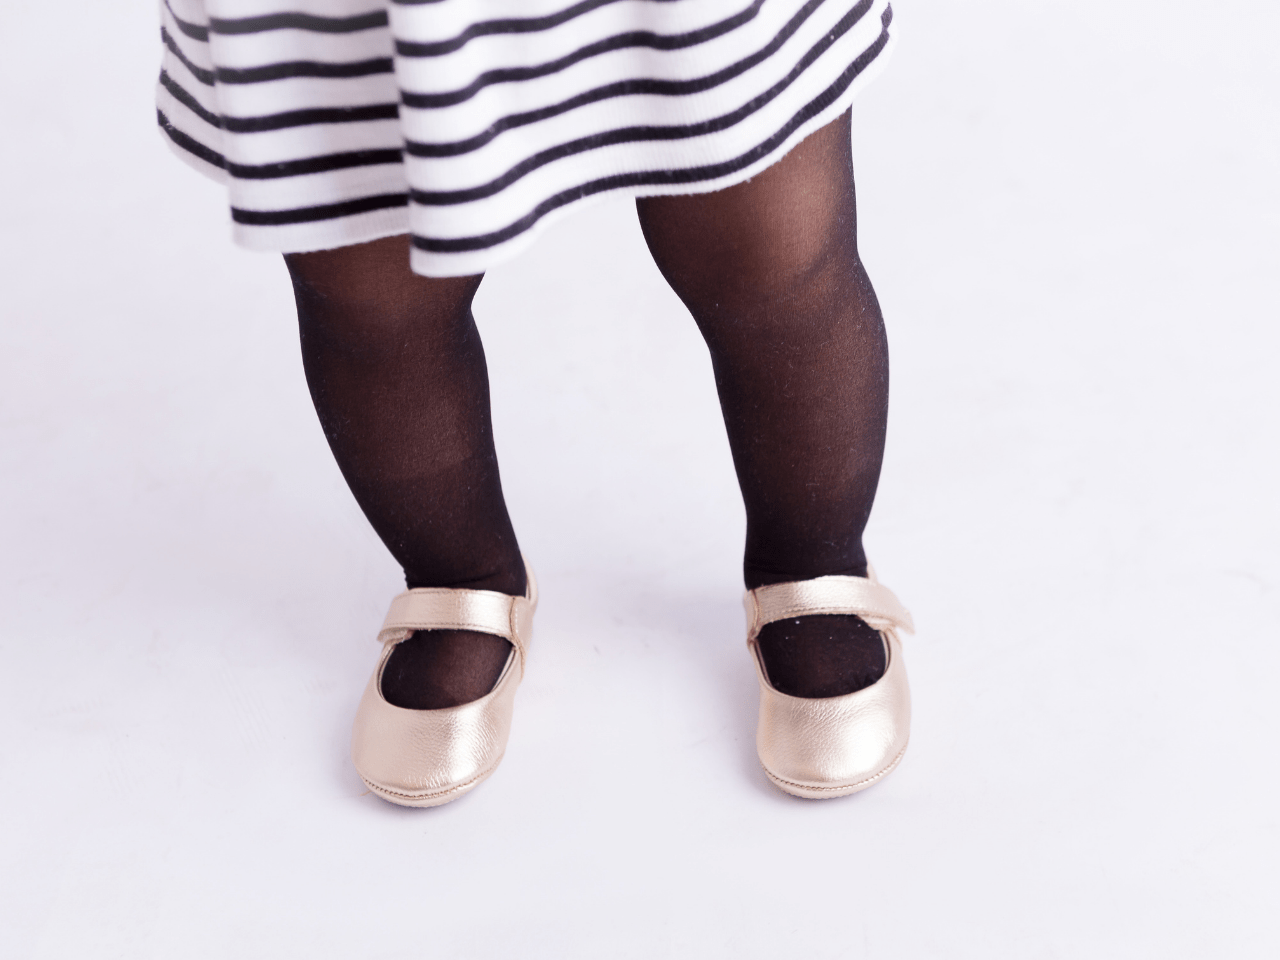 Sapatilha Bebê Luiza Dourada - Lupe Lupe Shoes